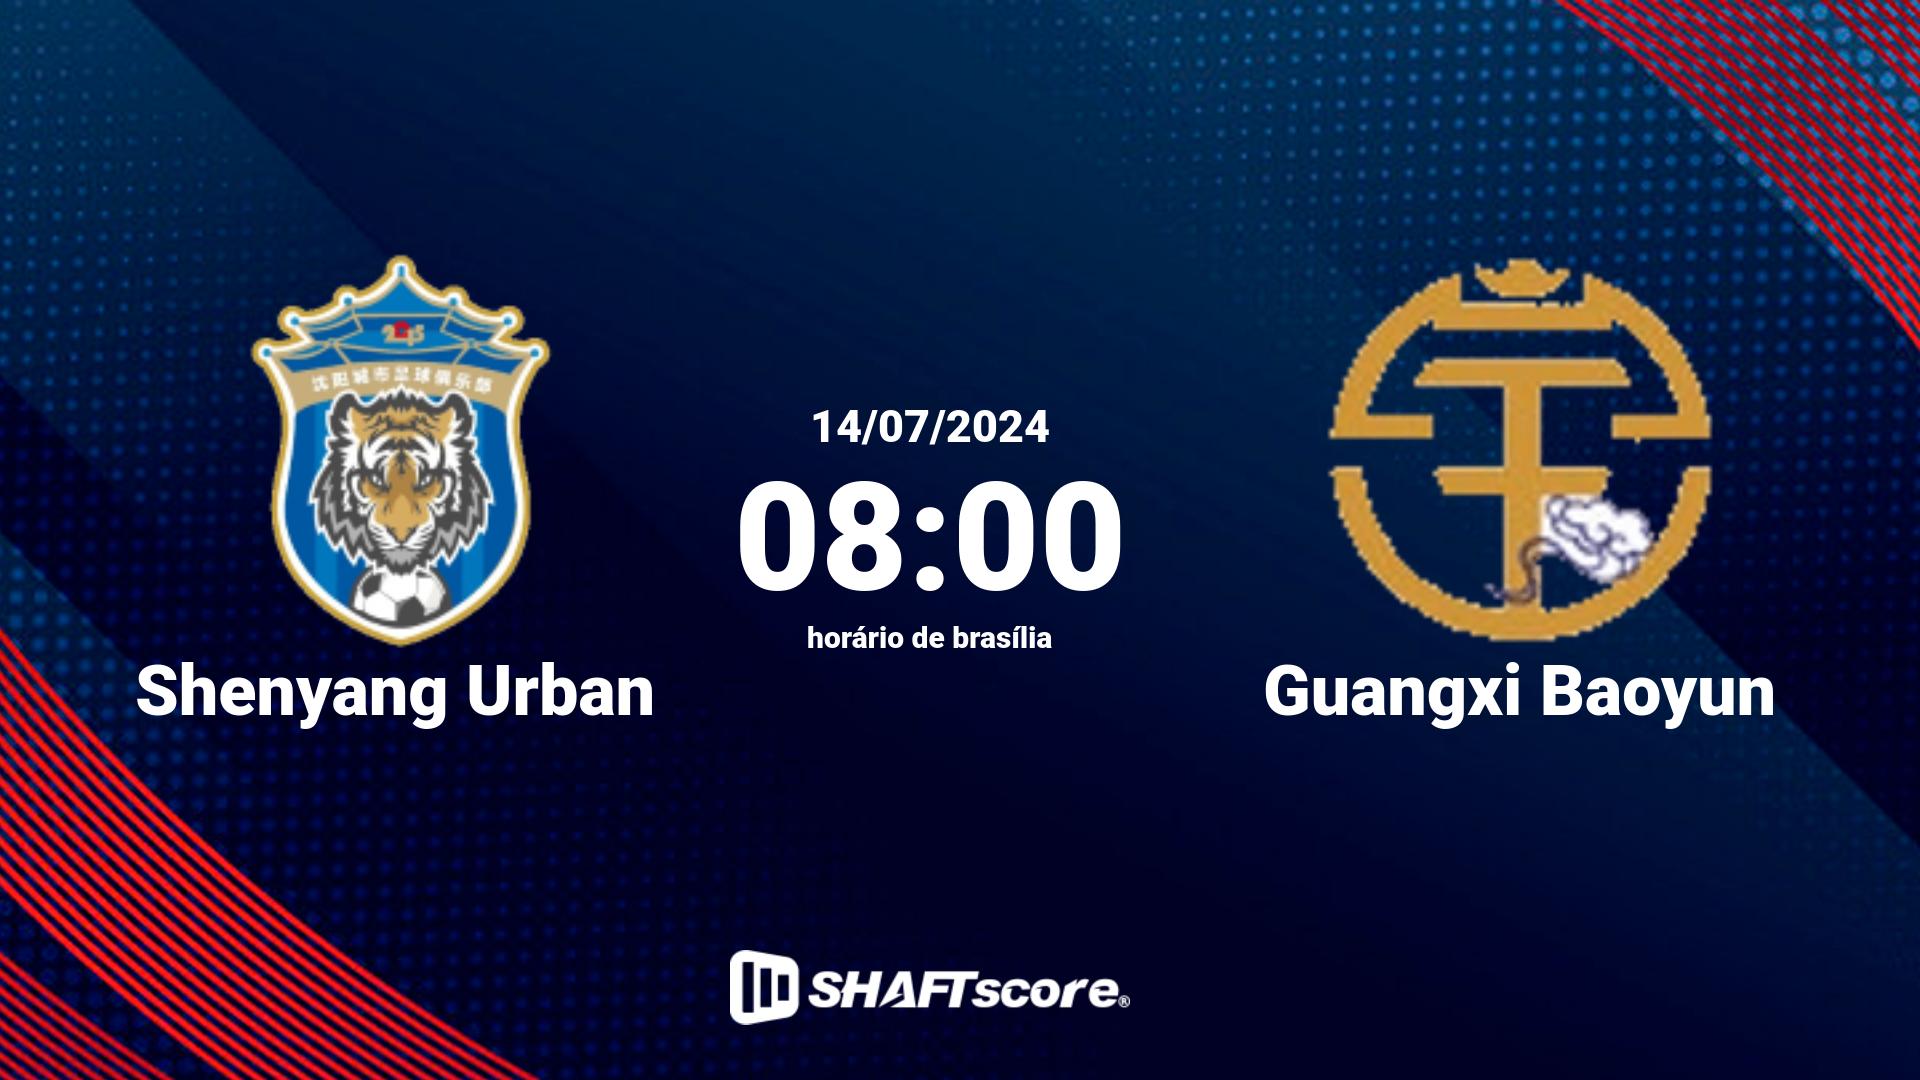 Estatísticas do jogo Shenyang Urban vs Guangxi Baoyun 14.07 08:00